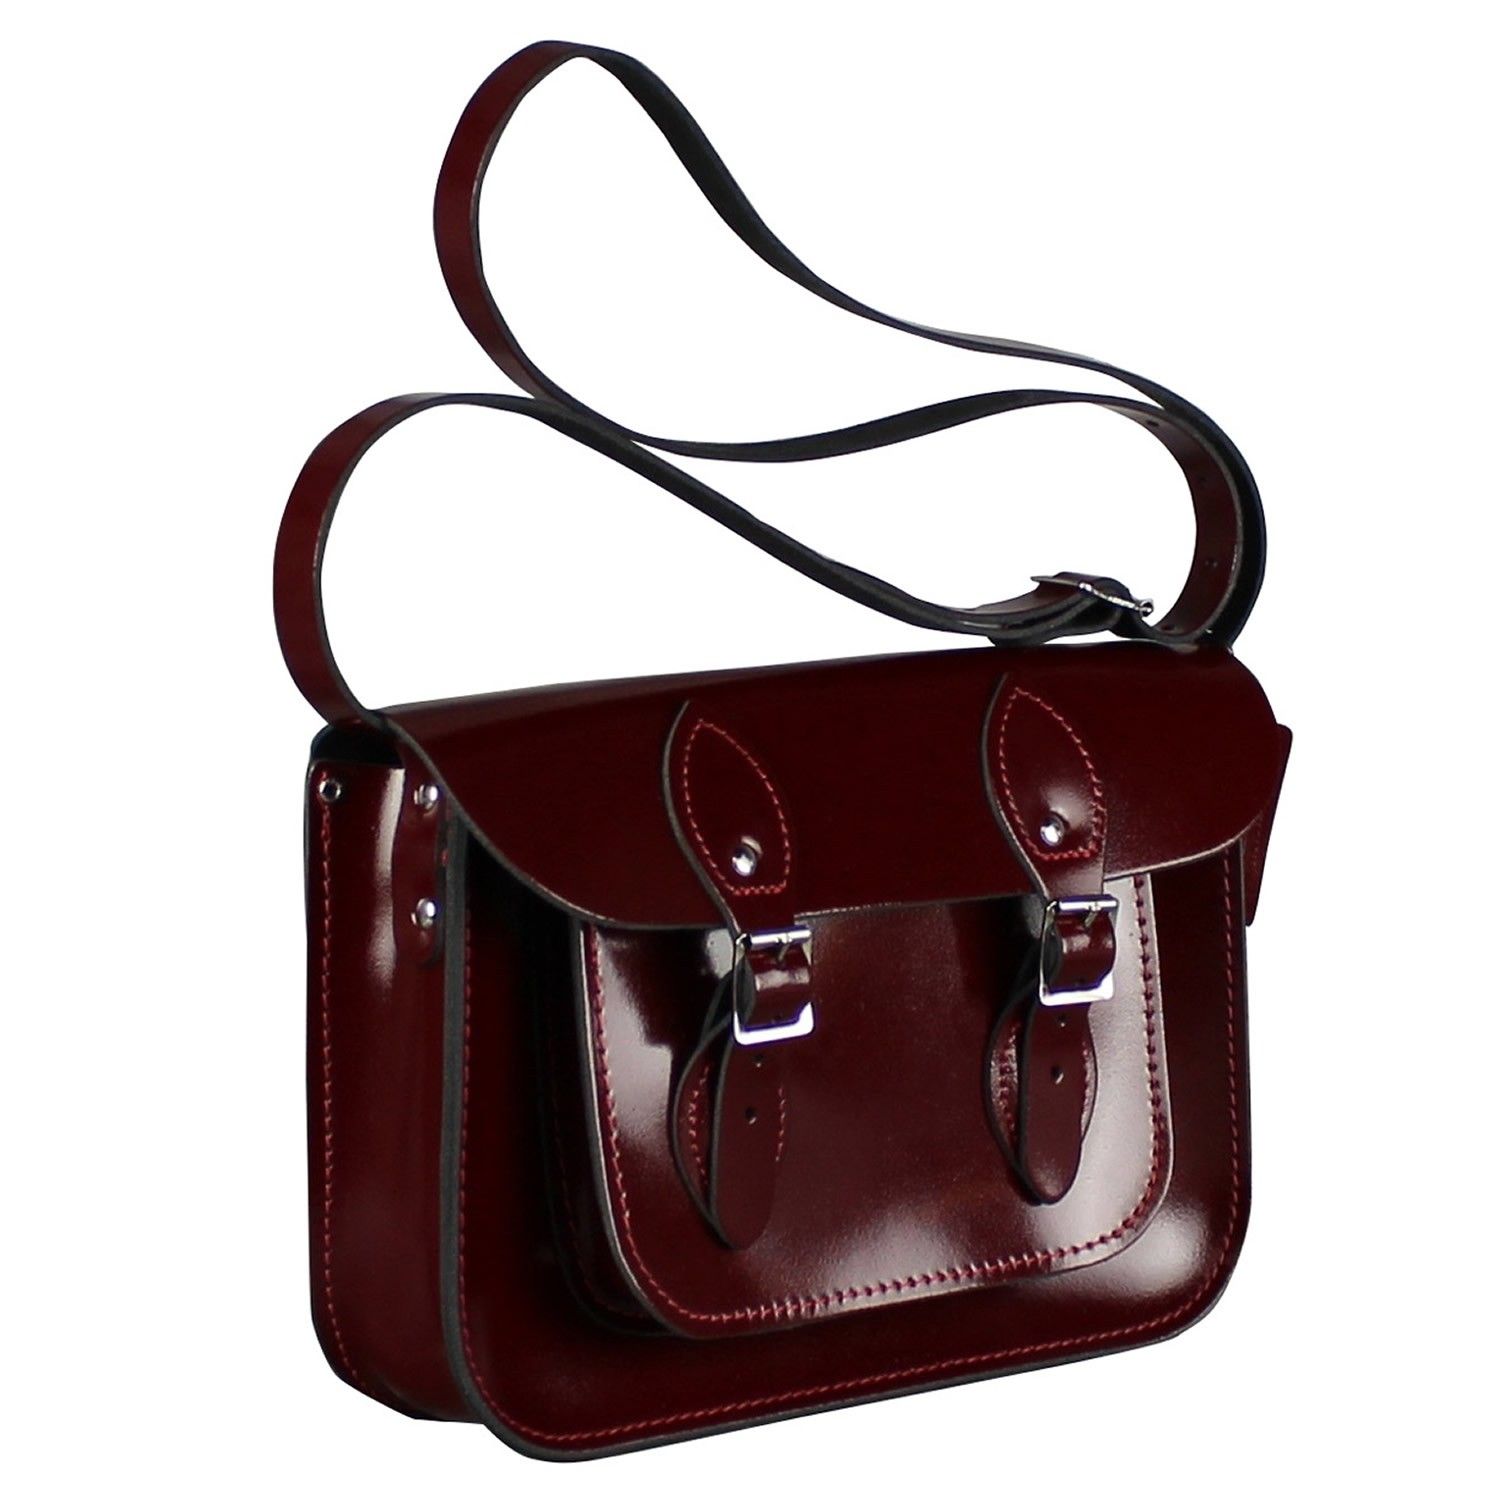 Rad oxblood. The Leather Satchel сумки. Mini Satchel Patent Oxblood Red. Сумка сэтчел английская. Сумка 11 inch.